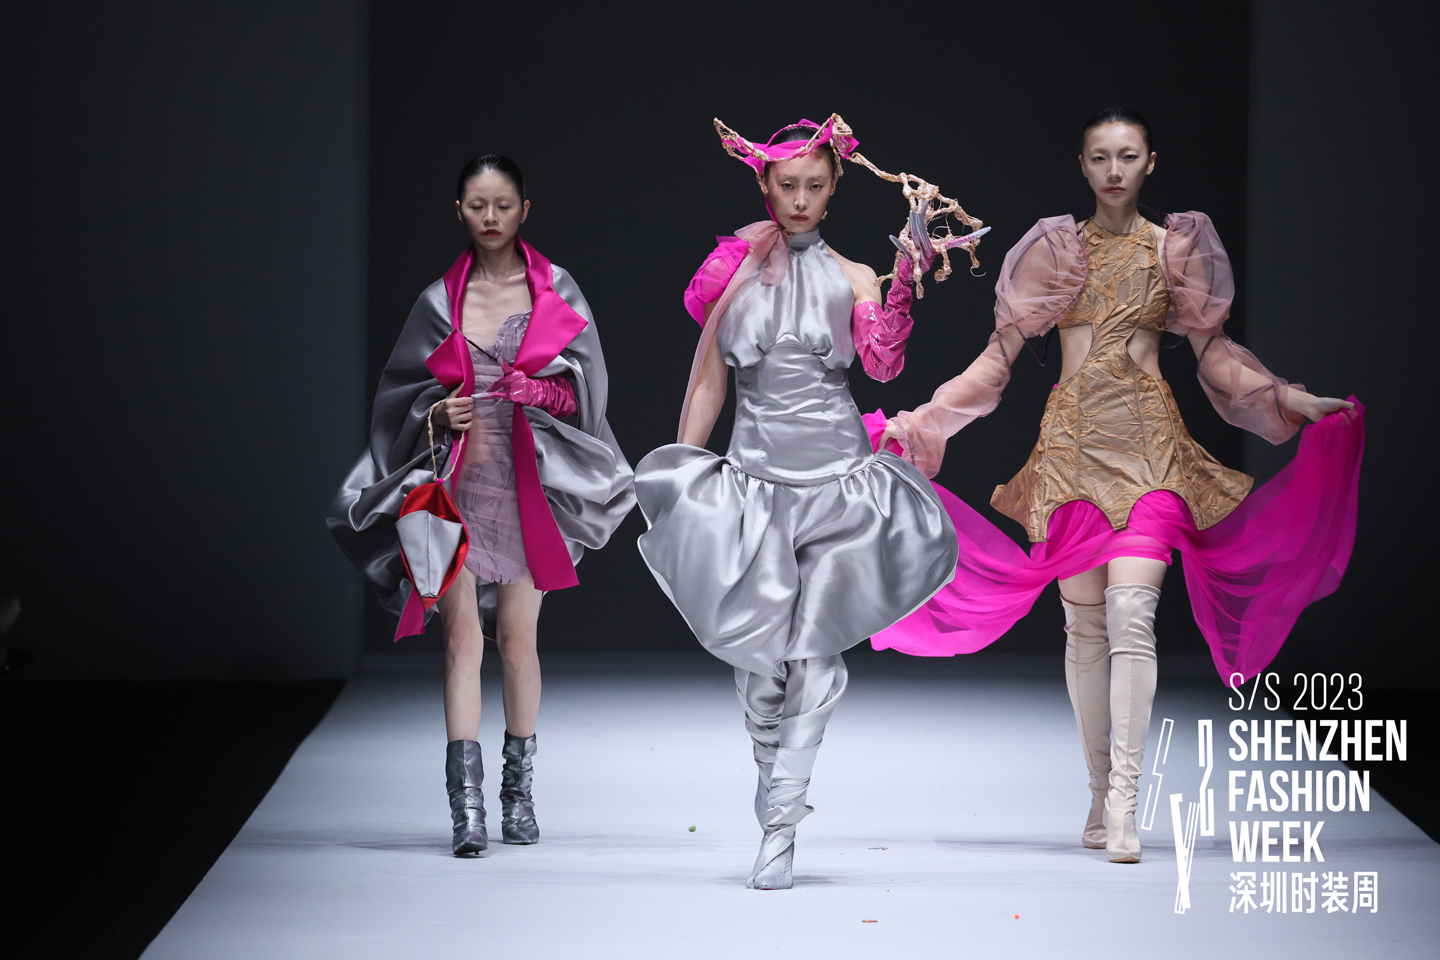 Models hitting the catwalk in stunning looks by Istituto Marangoni Shenzhen Fashion Design talent Jiayi Feng